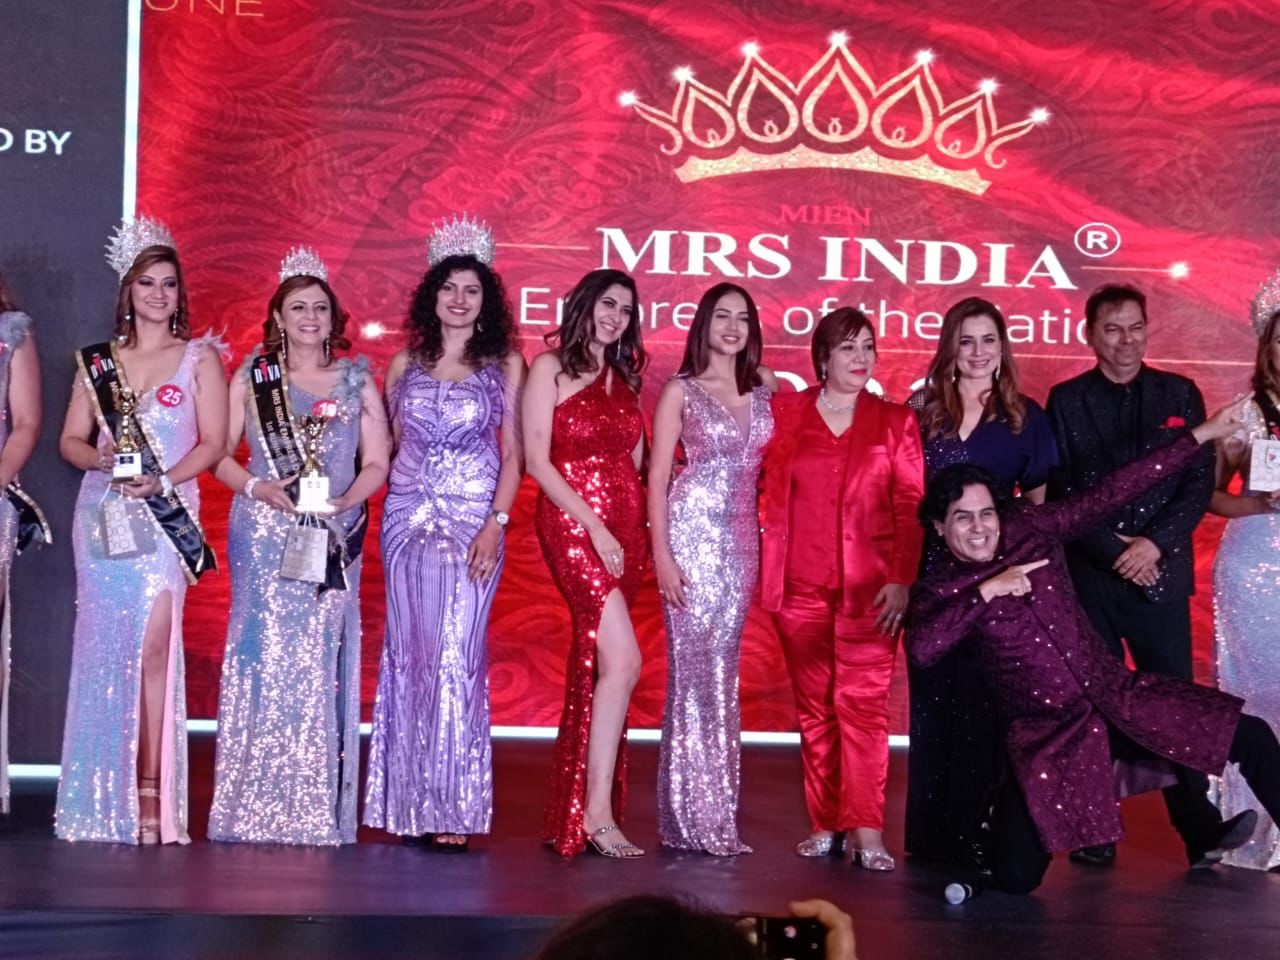 Apeksha Dabral won Mrs India